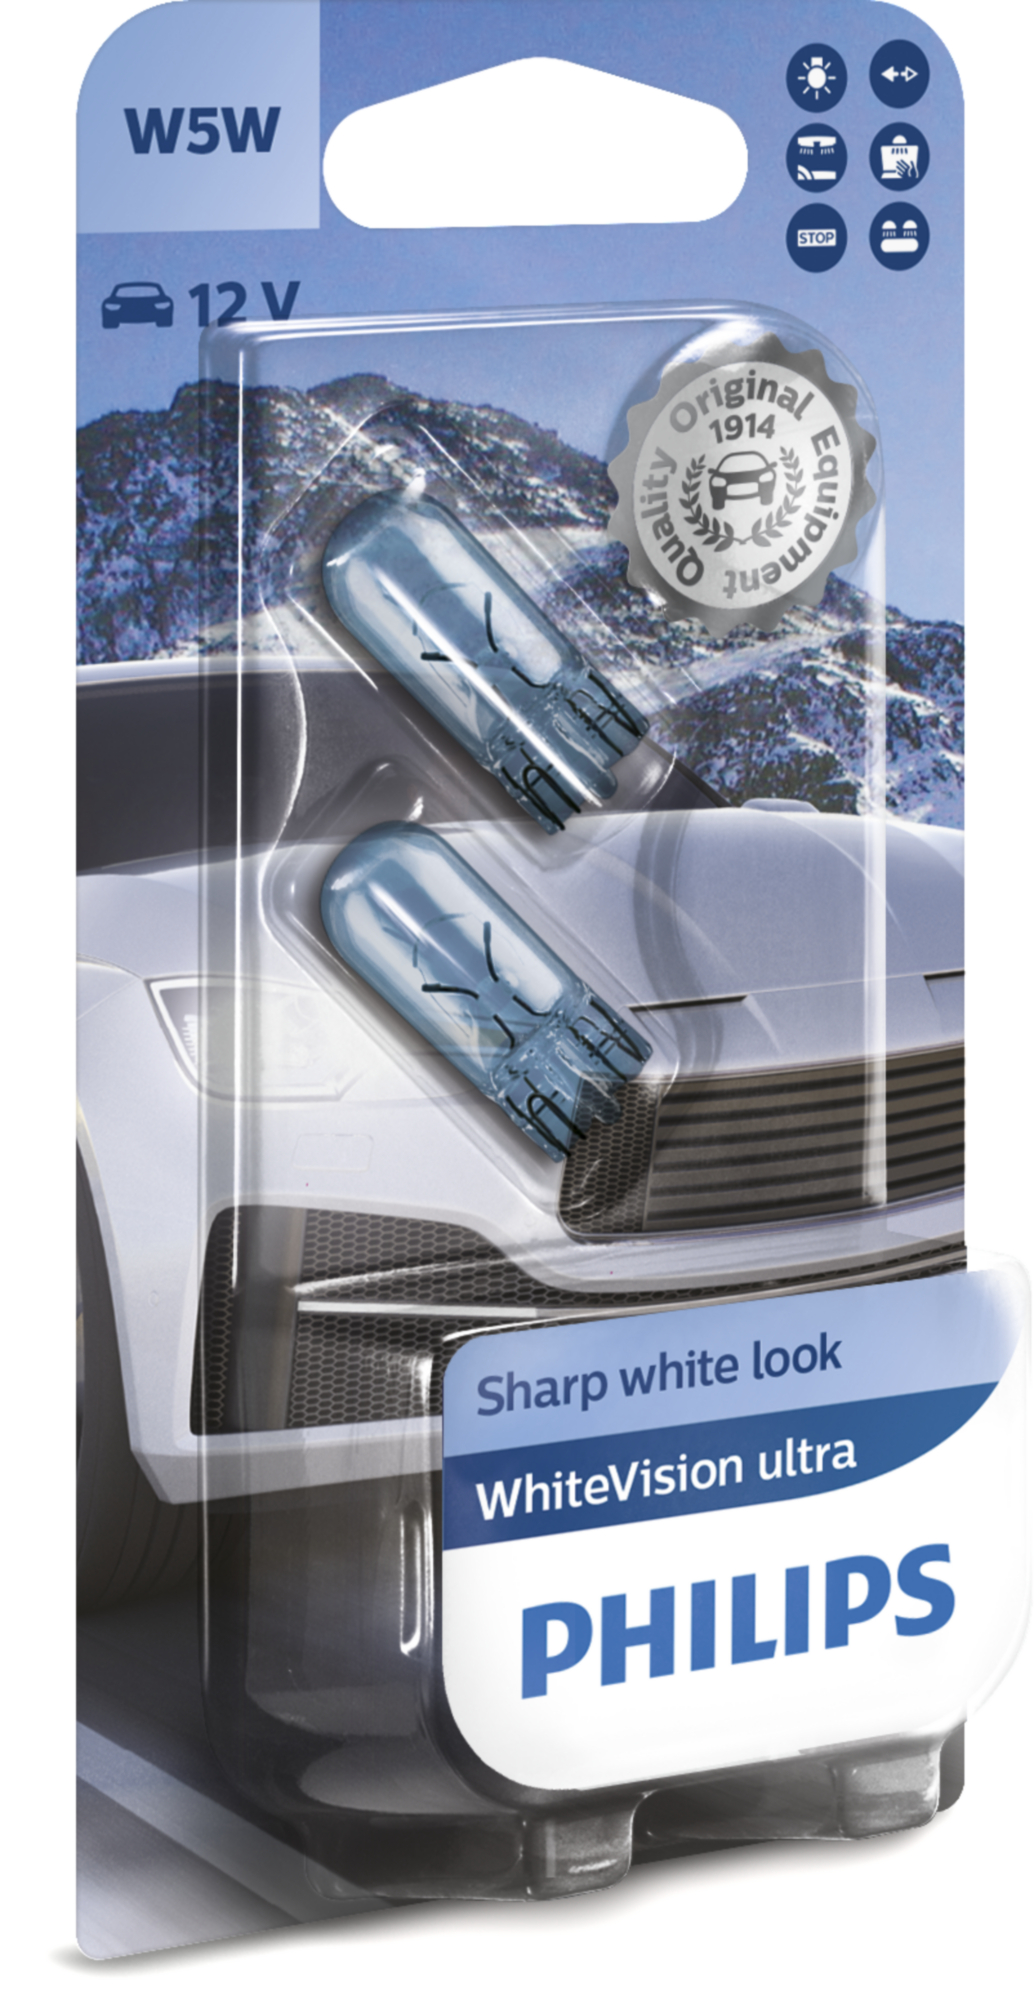 Philips Signallampe W5W WhiteVision ultra